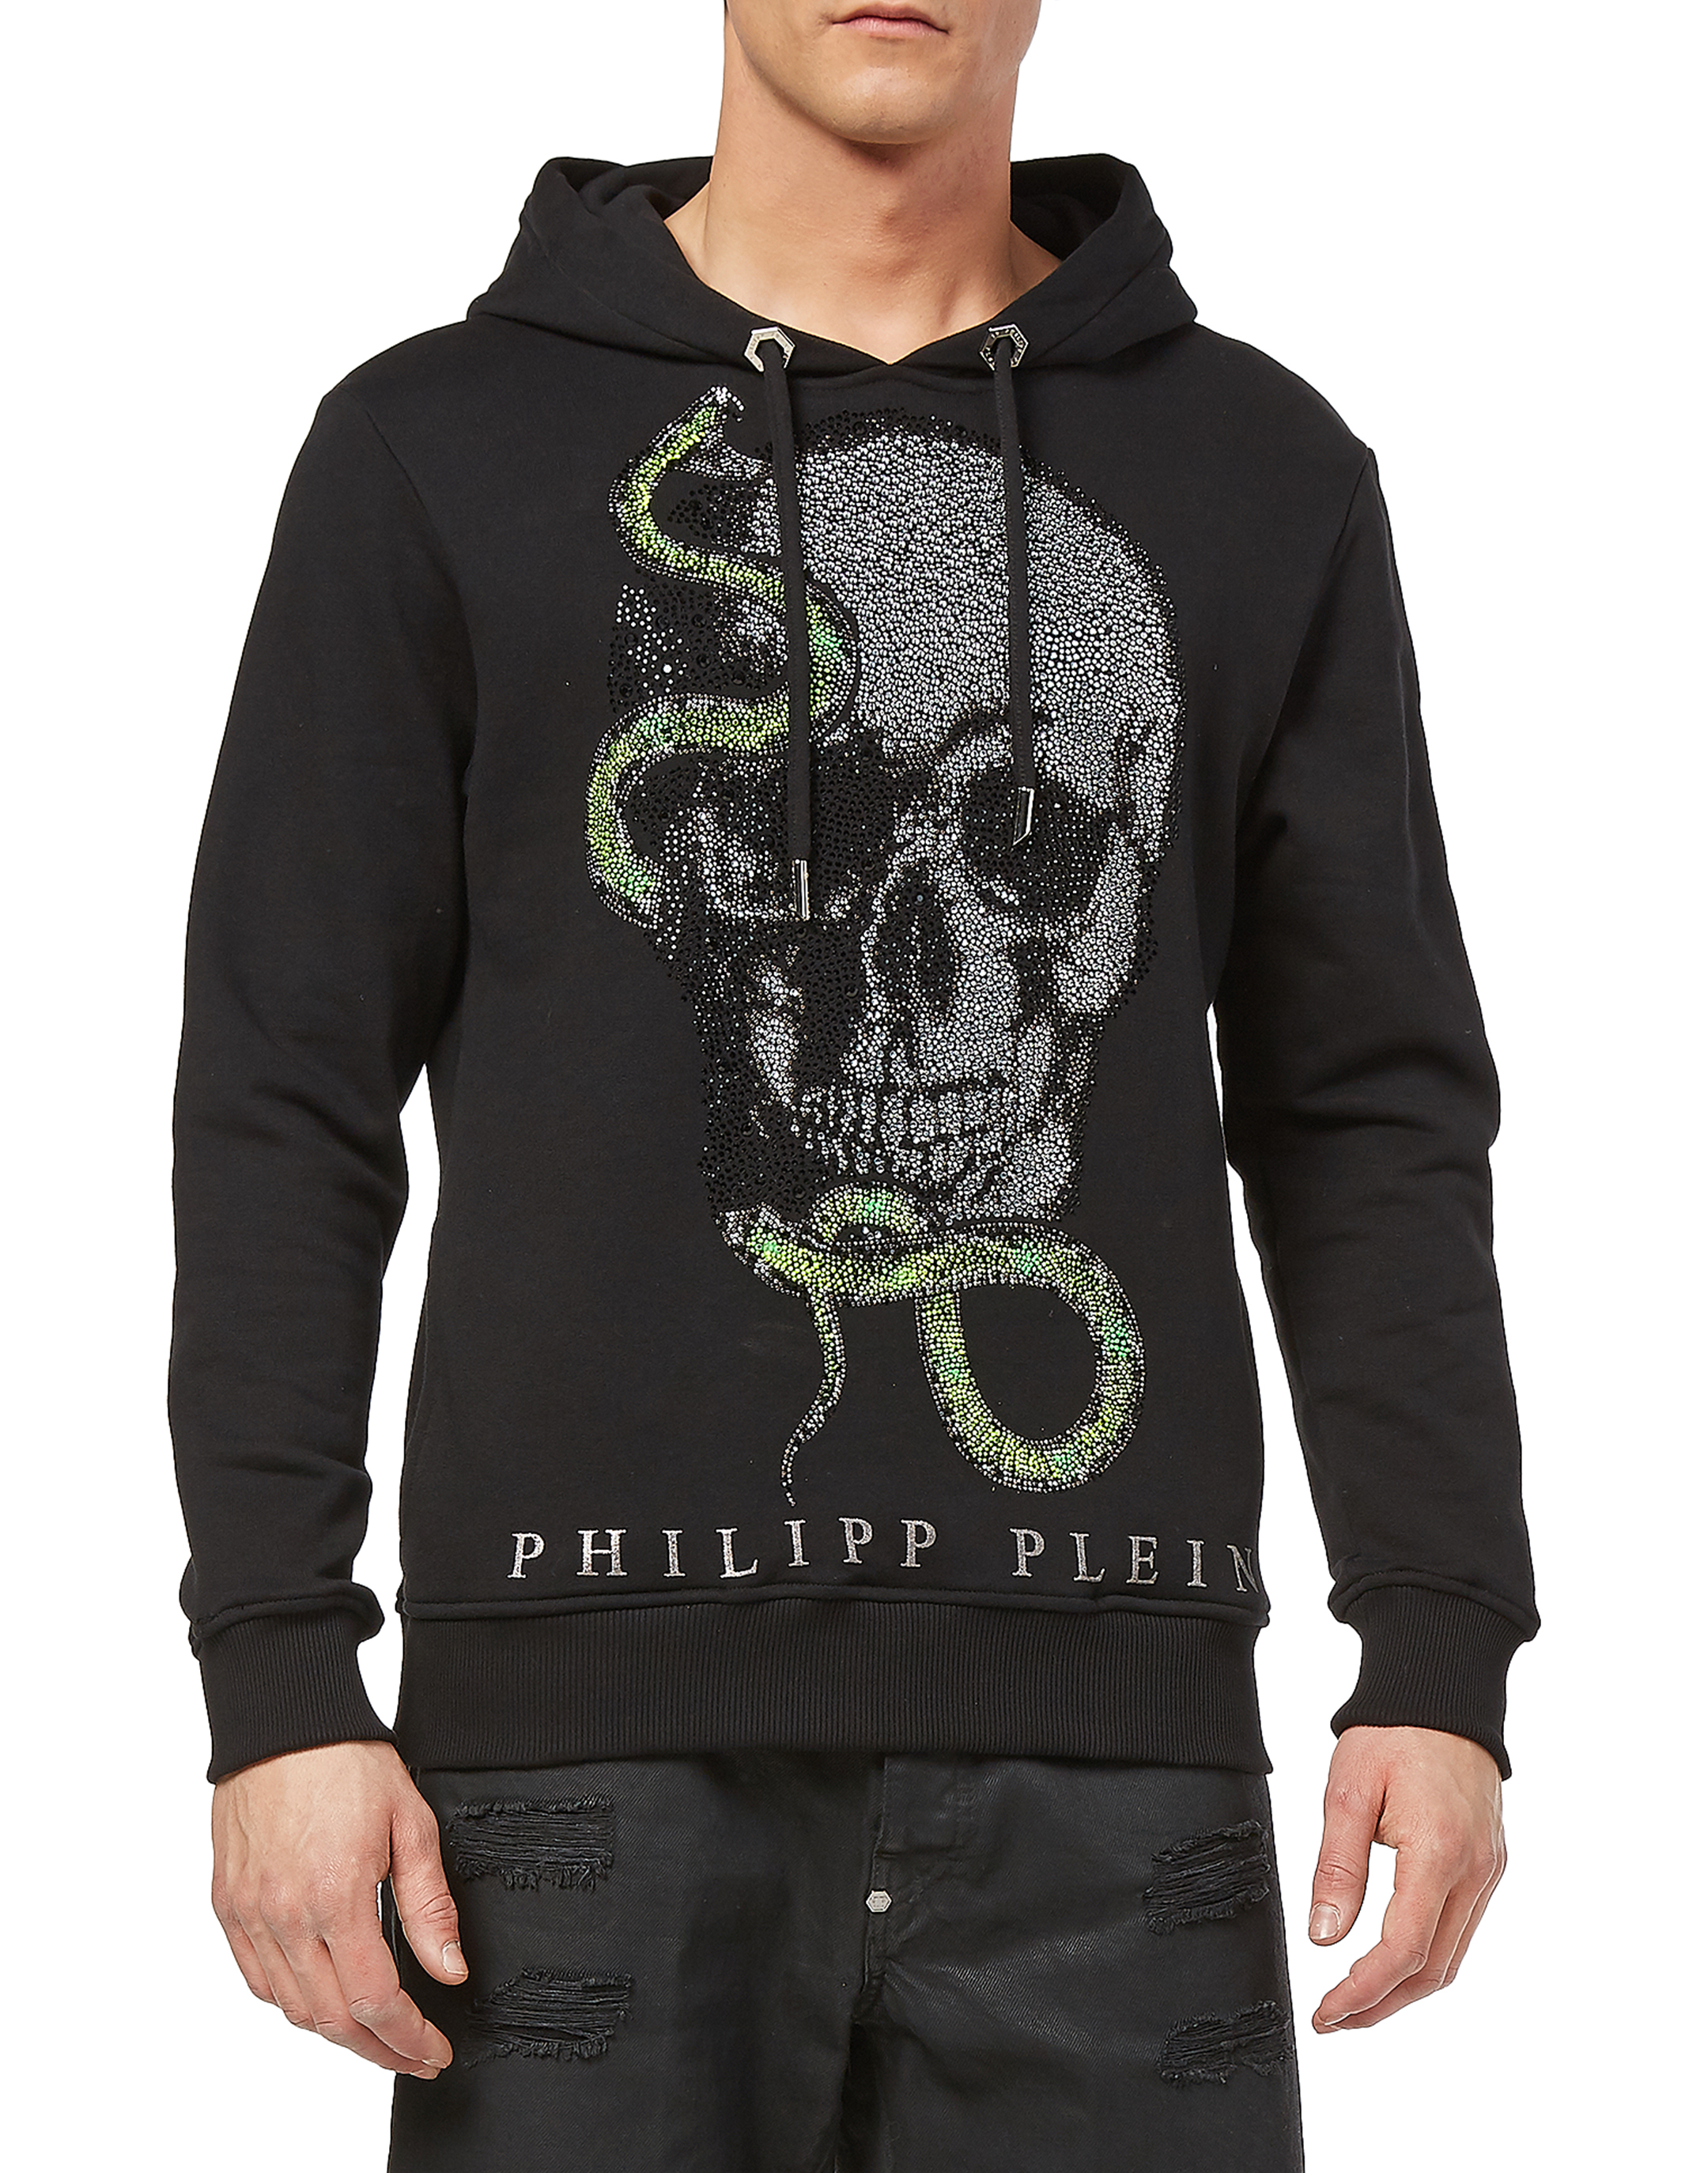 philipp plein hoodie sweatshirt